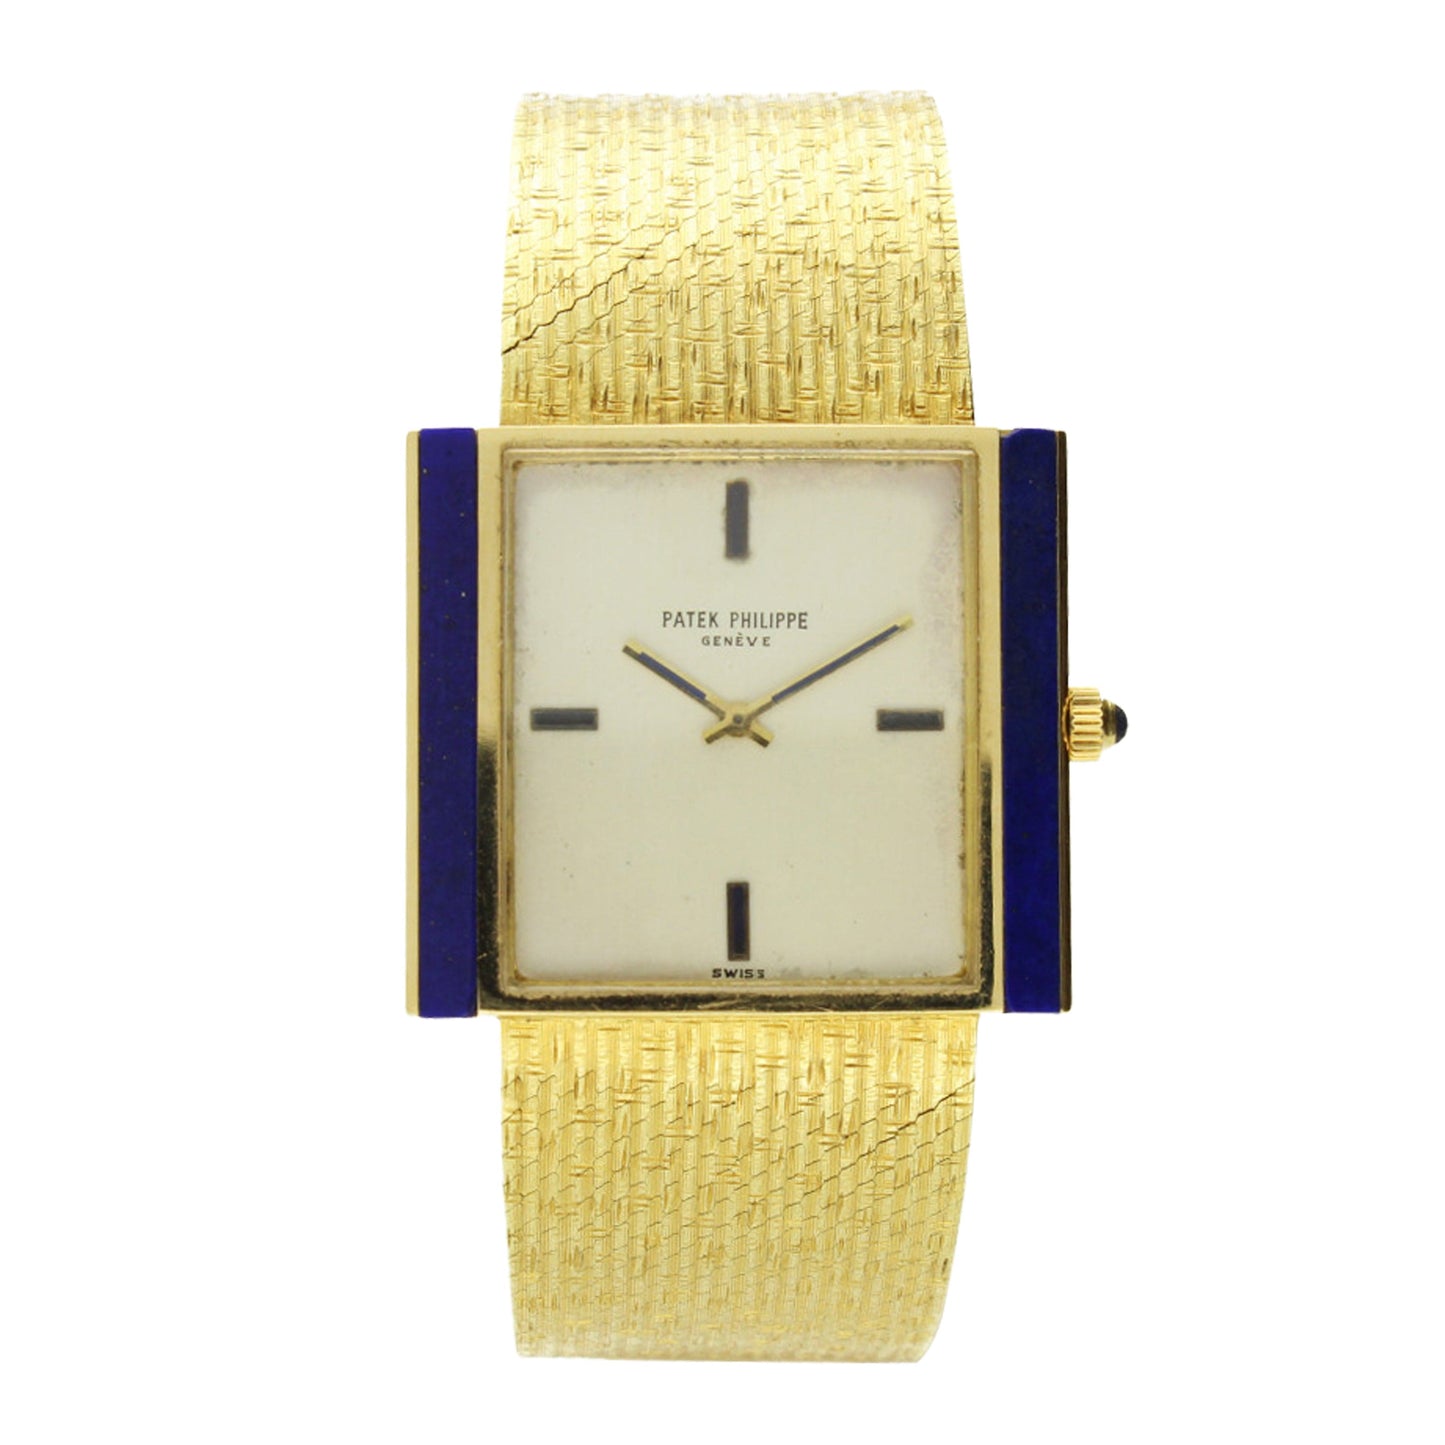 18ct yellow gold and lapis lazuli set, reference 3578/1 bracelet watch. Made 1976